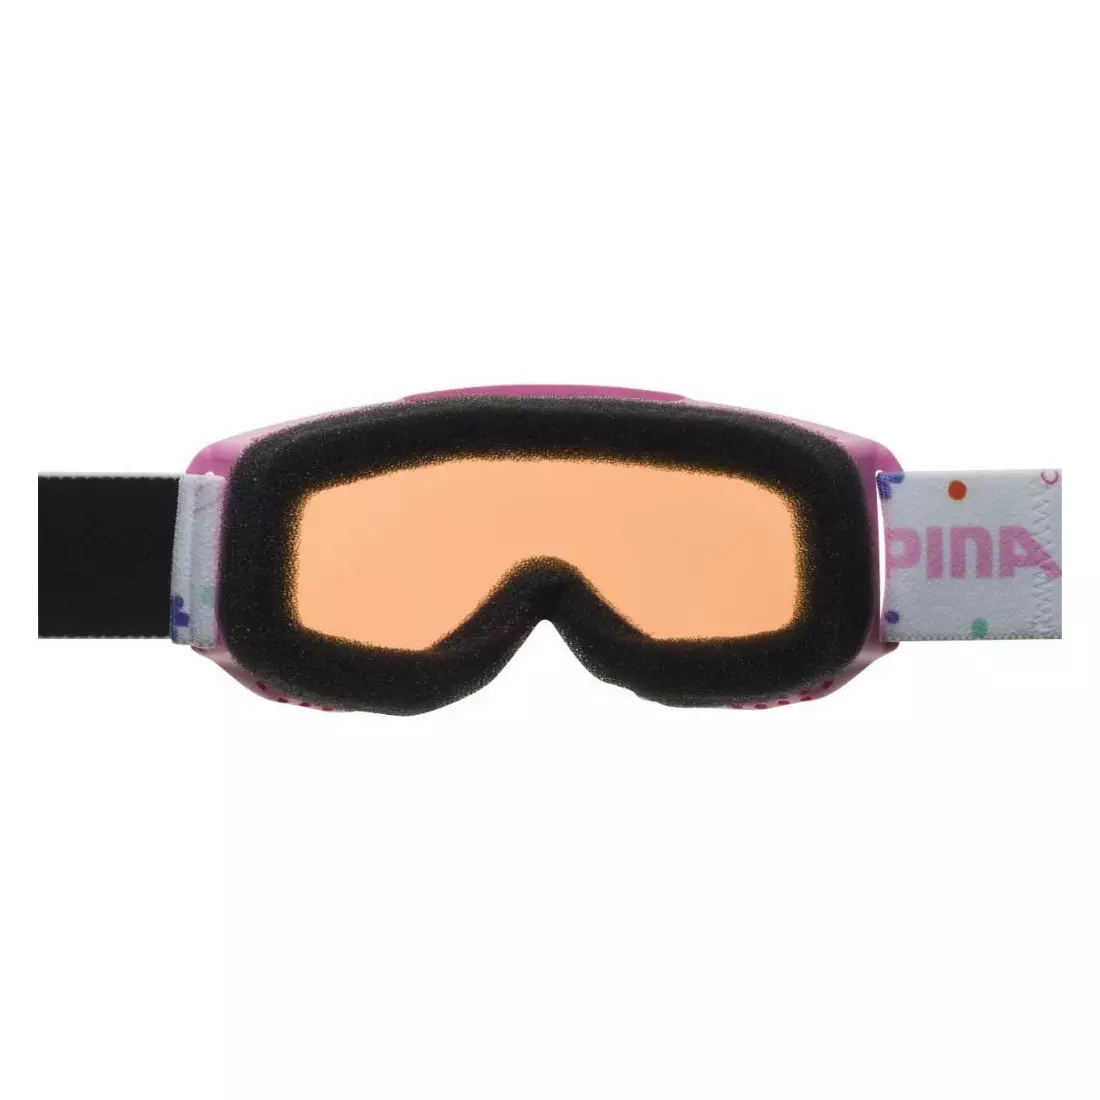 Sí / snowboard szemüveg ALPINA JUNIOR PINEY ROSE-ROSE A7268458